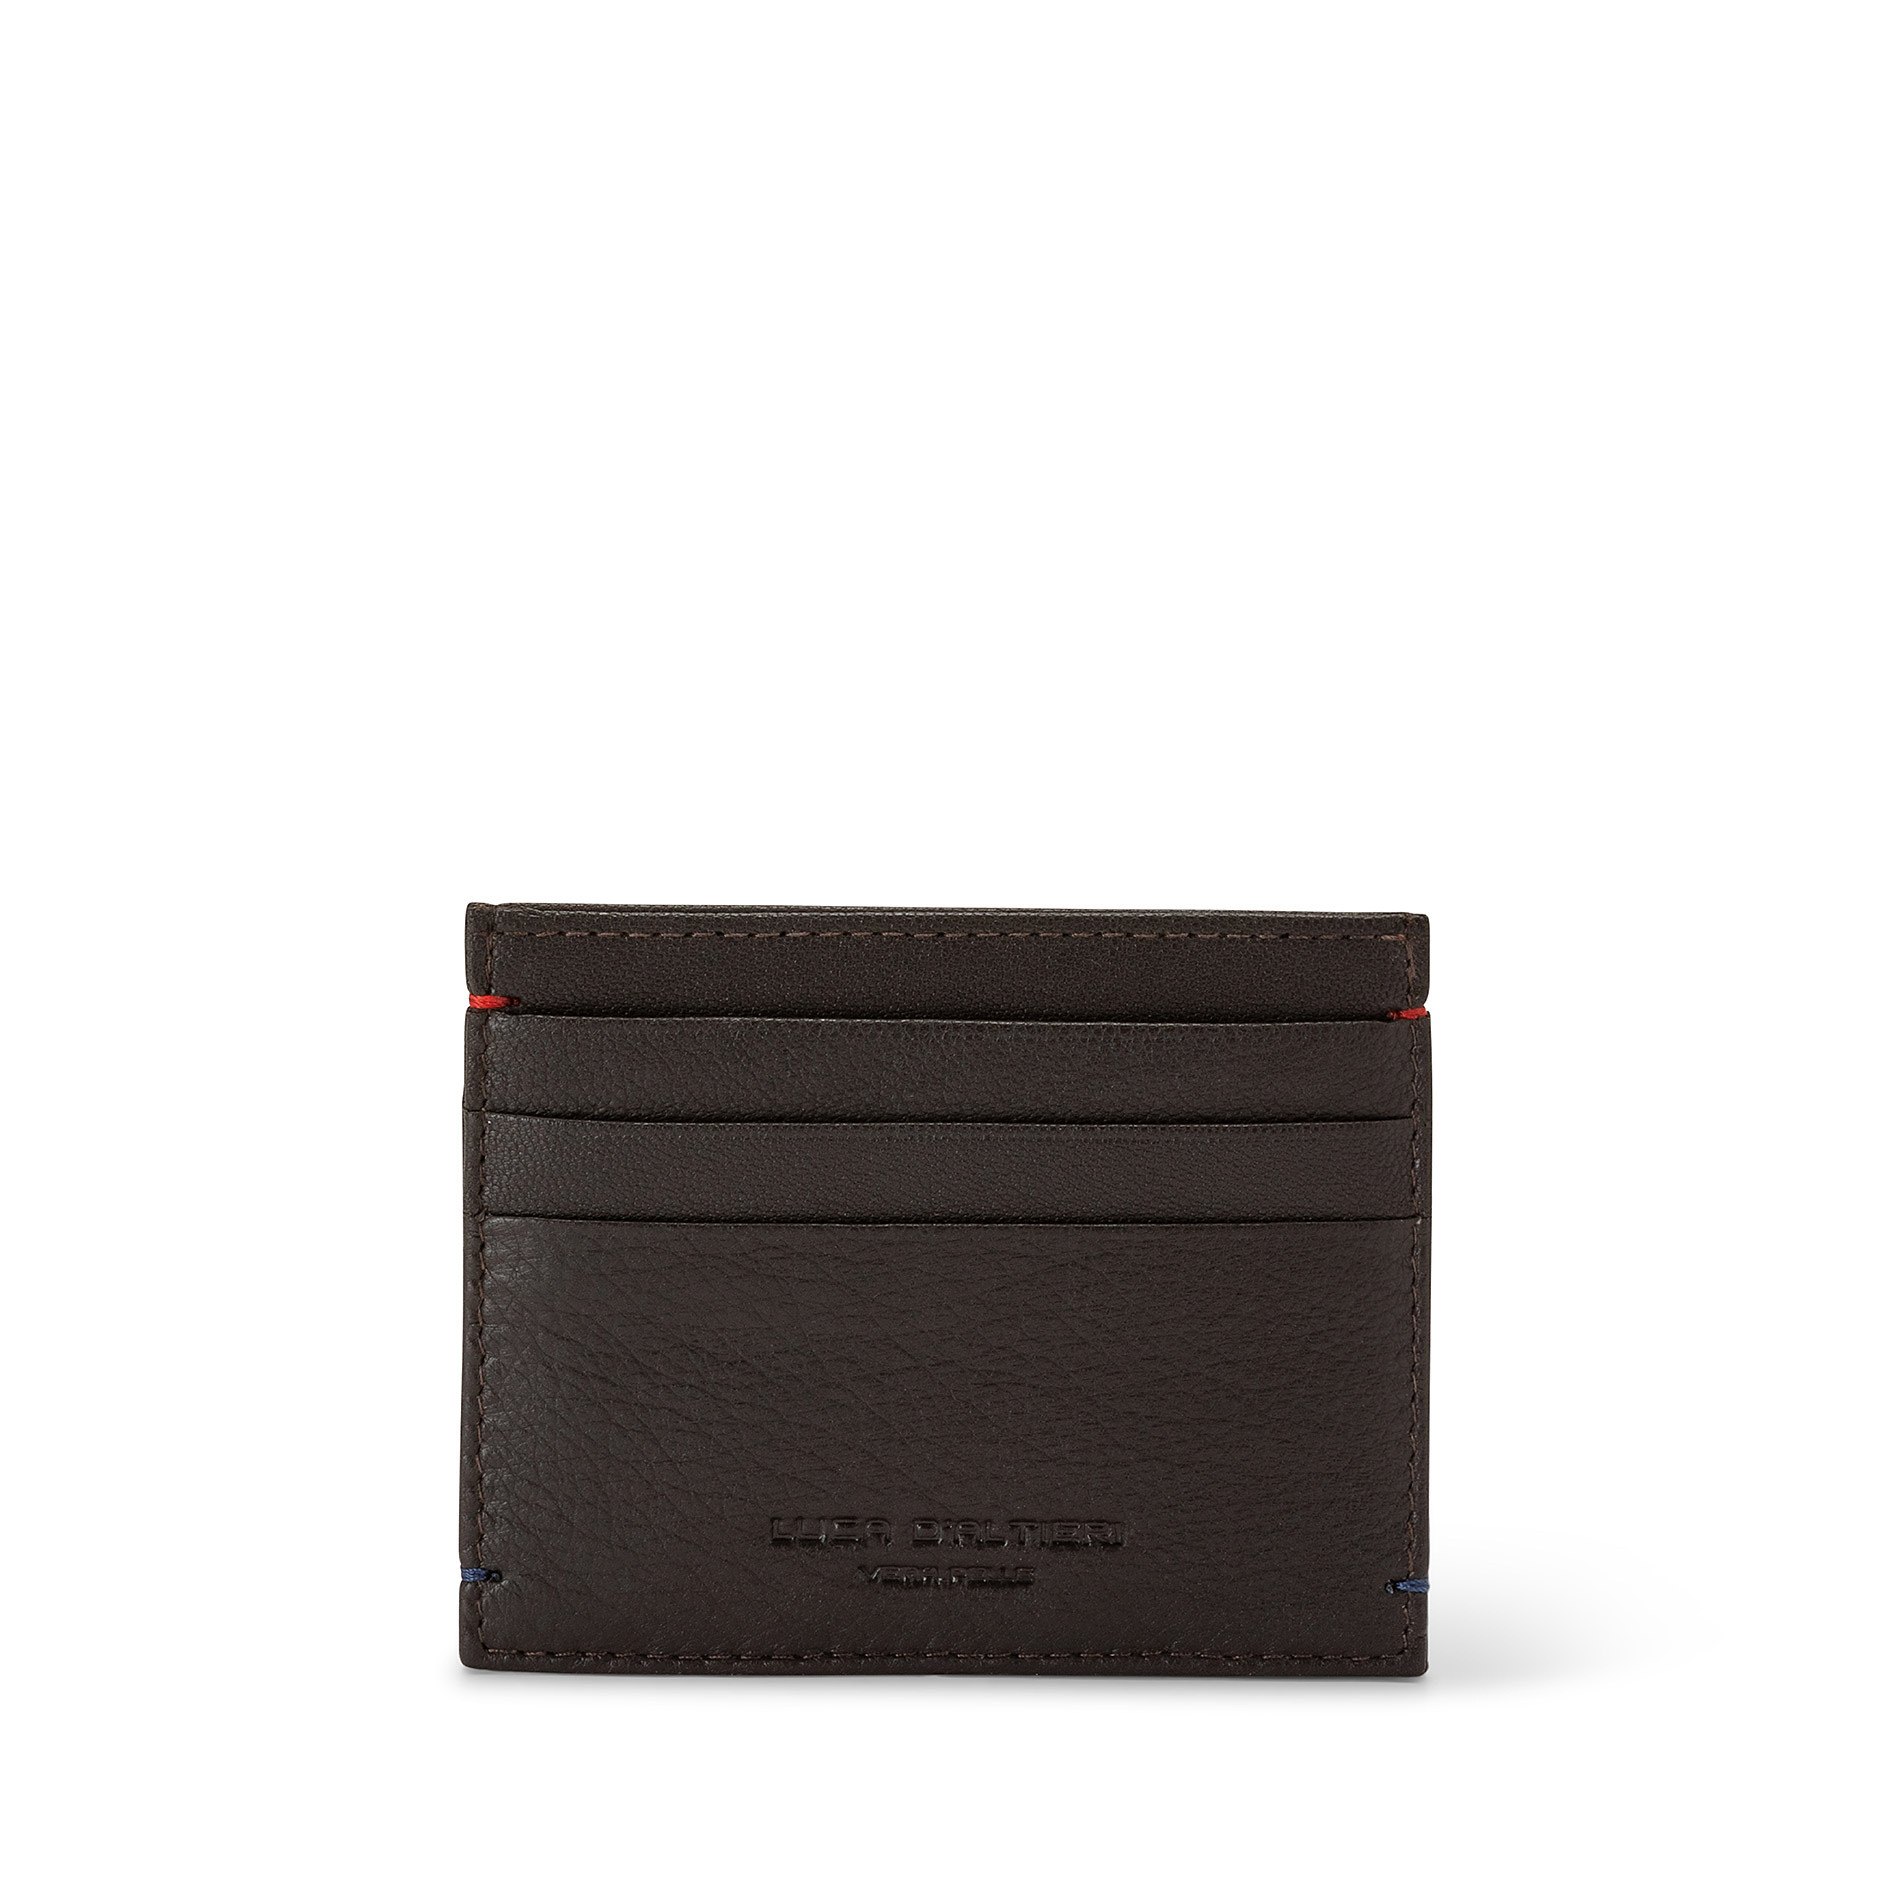 Luca D'Altieri leather credit card holder, Dark Brown, large image number 0